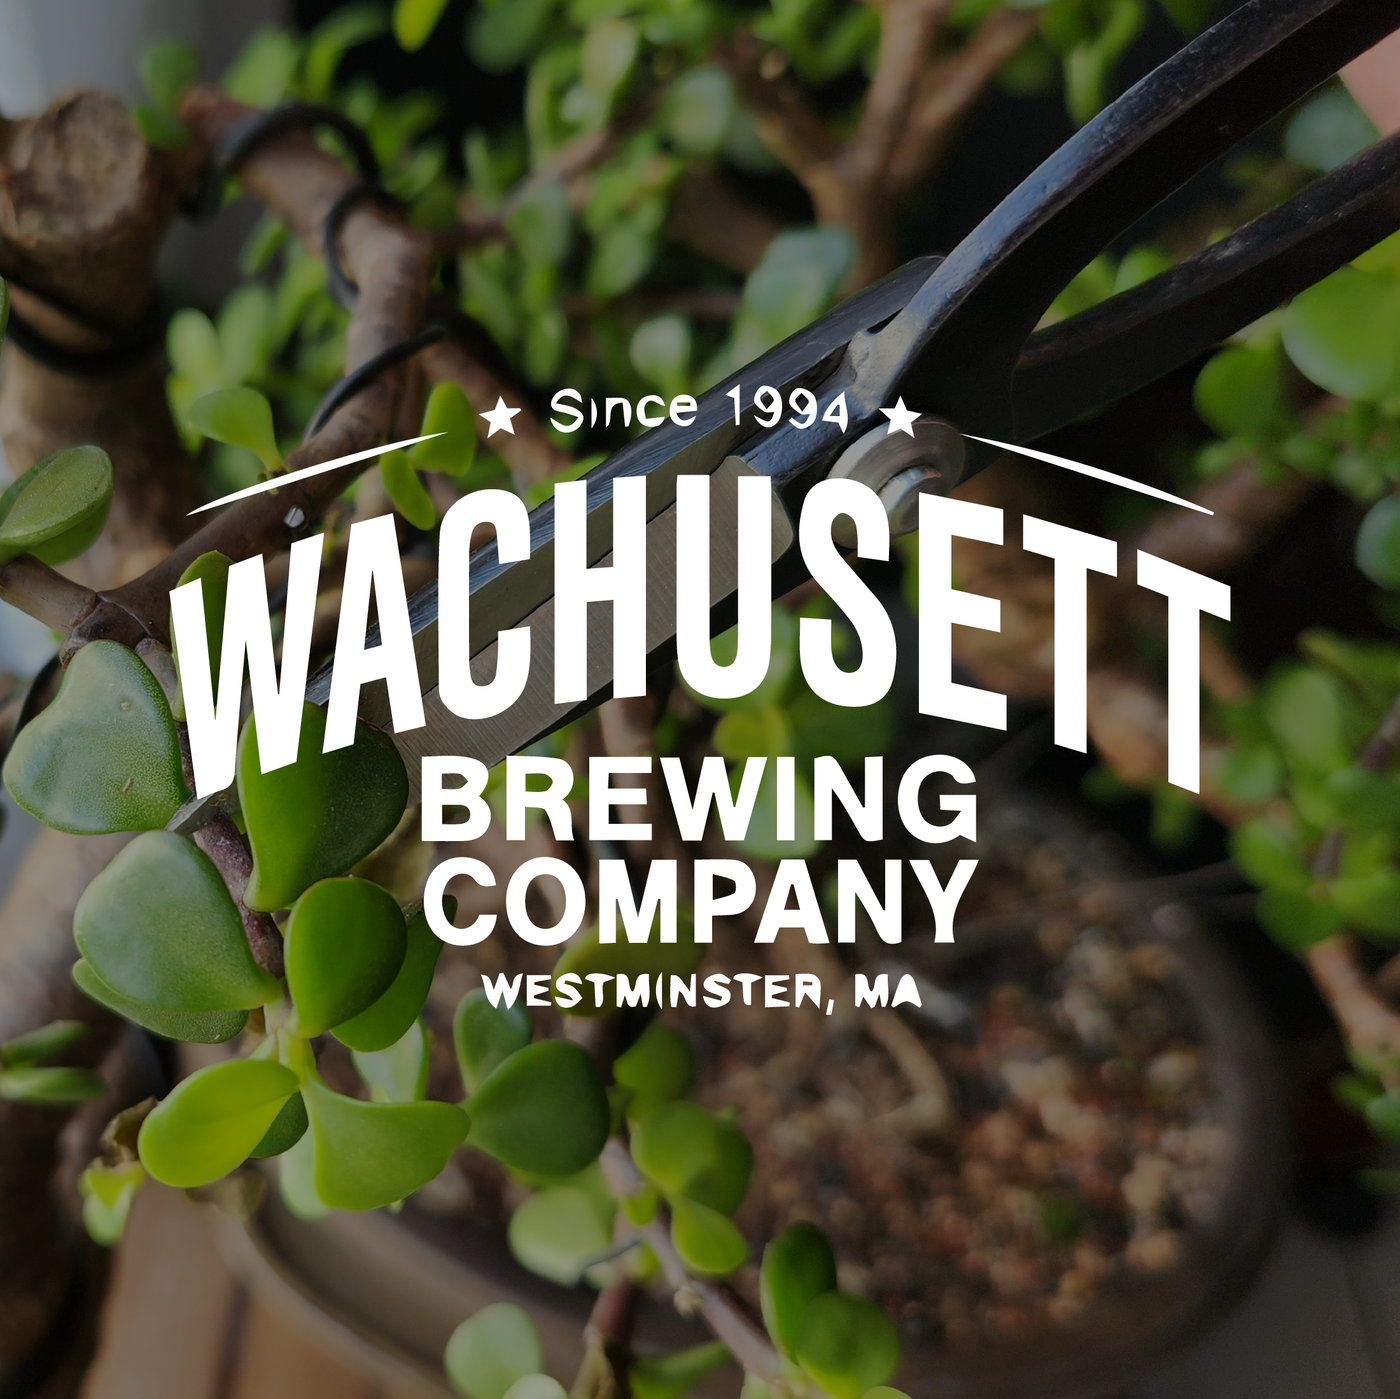 Wachusett Brewing Company - Westminster